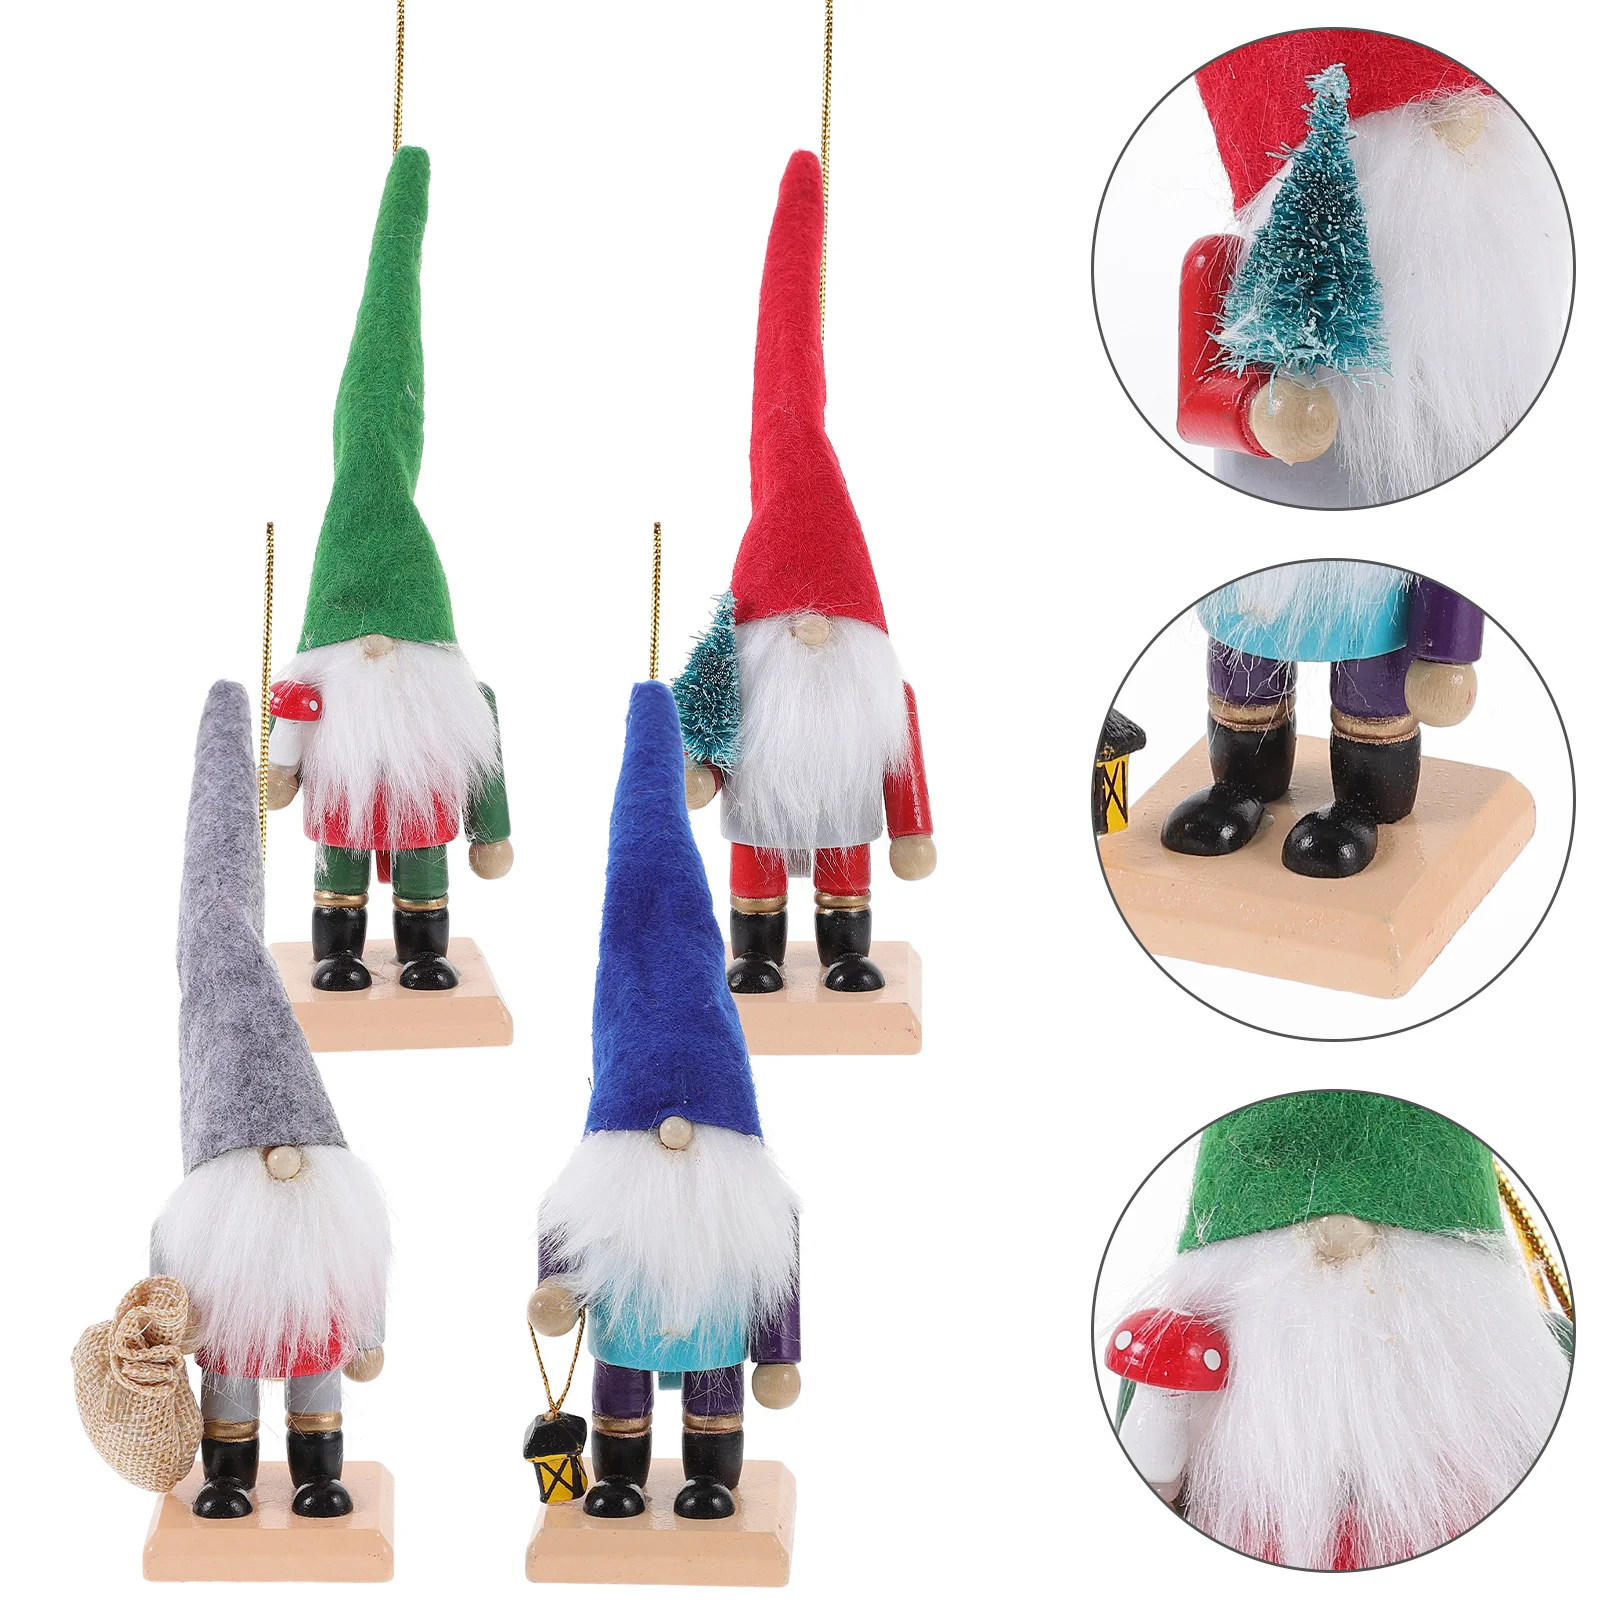 

4 Pcs Decor Santa Claus Nutcracker Nutcrackers Craft Christmas Gnome Desktop Wooden Child